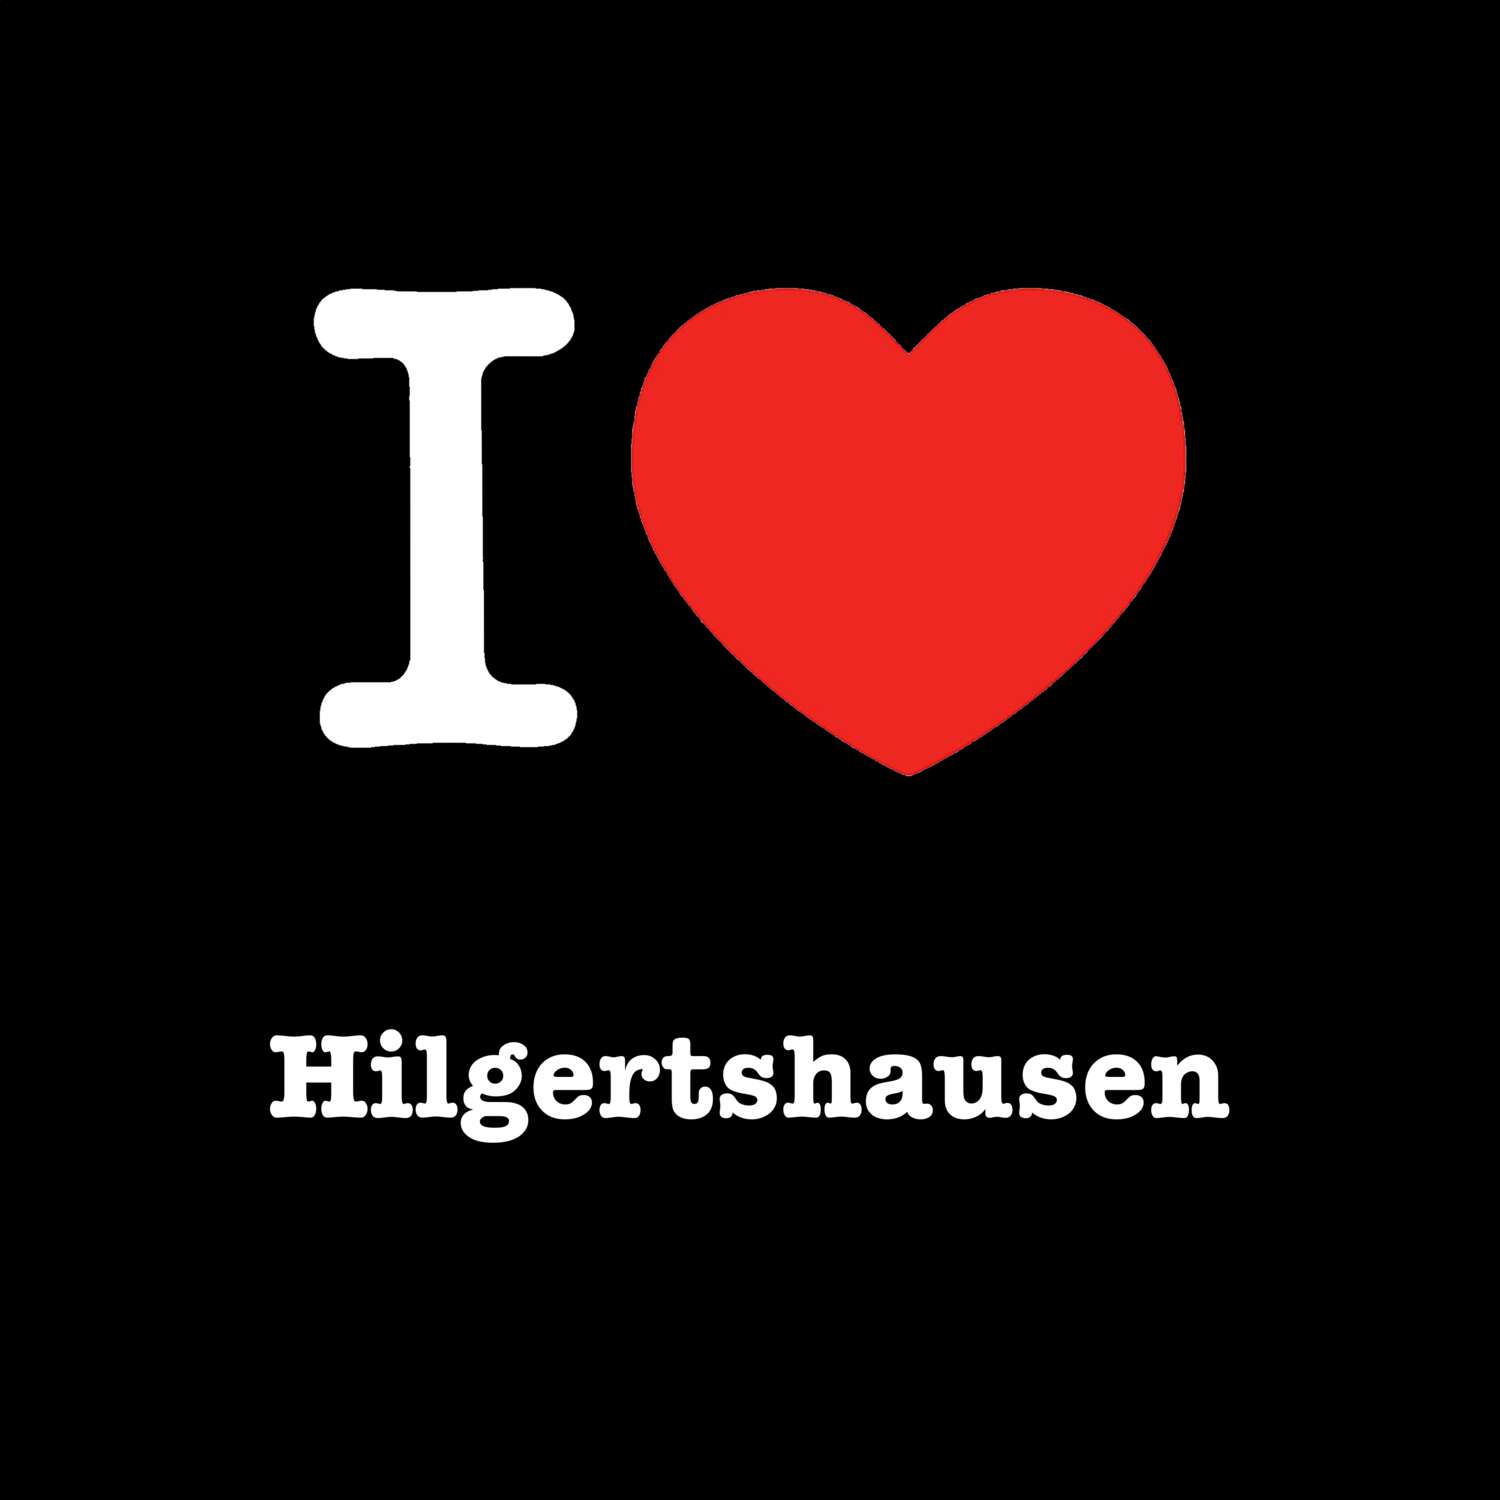 Hilgertshausen T-Shirt »I love«